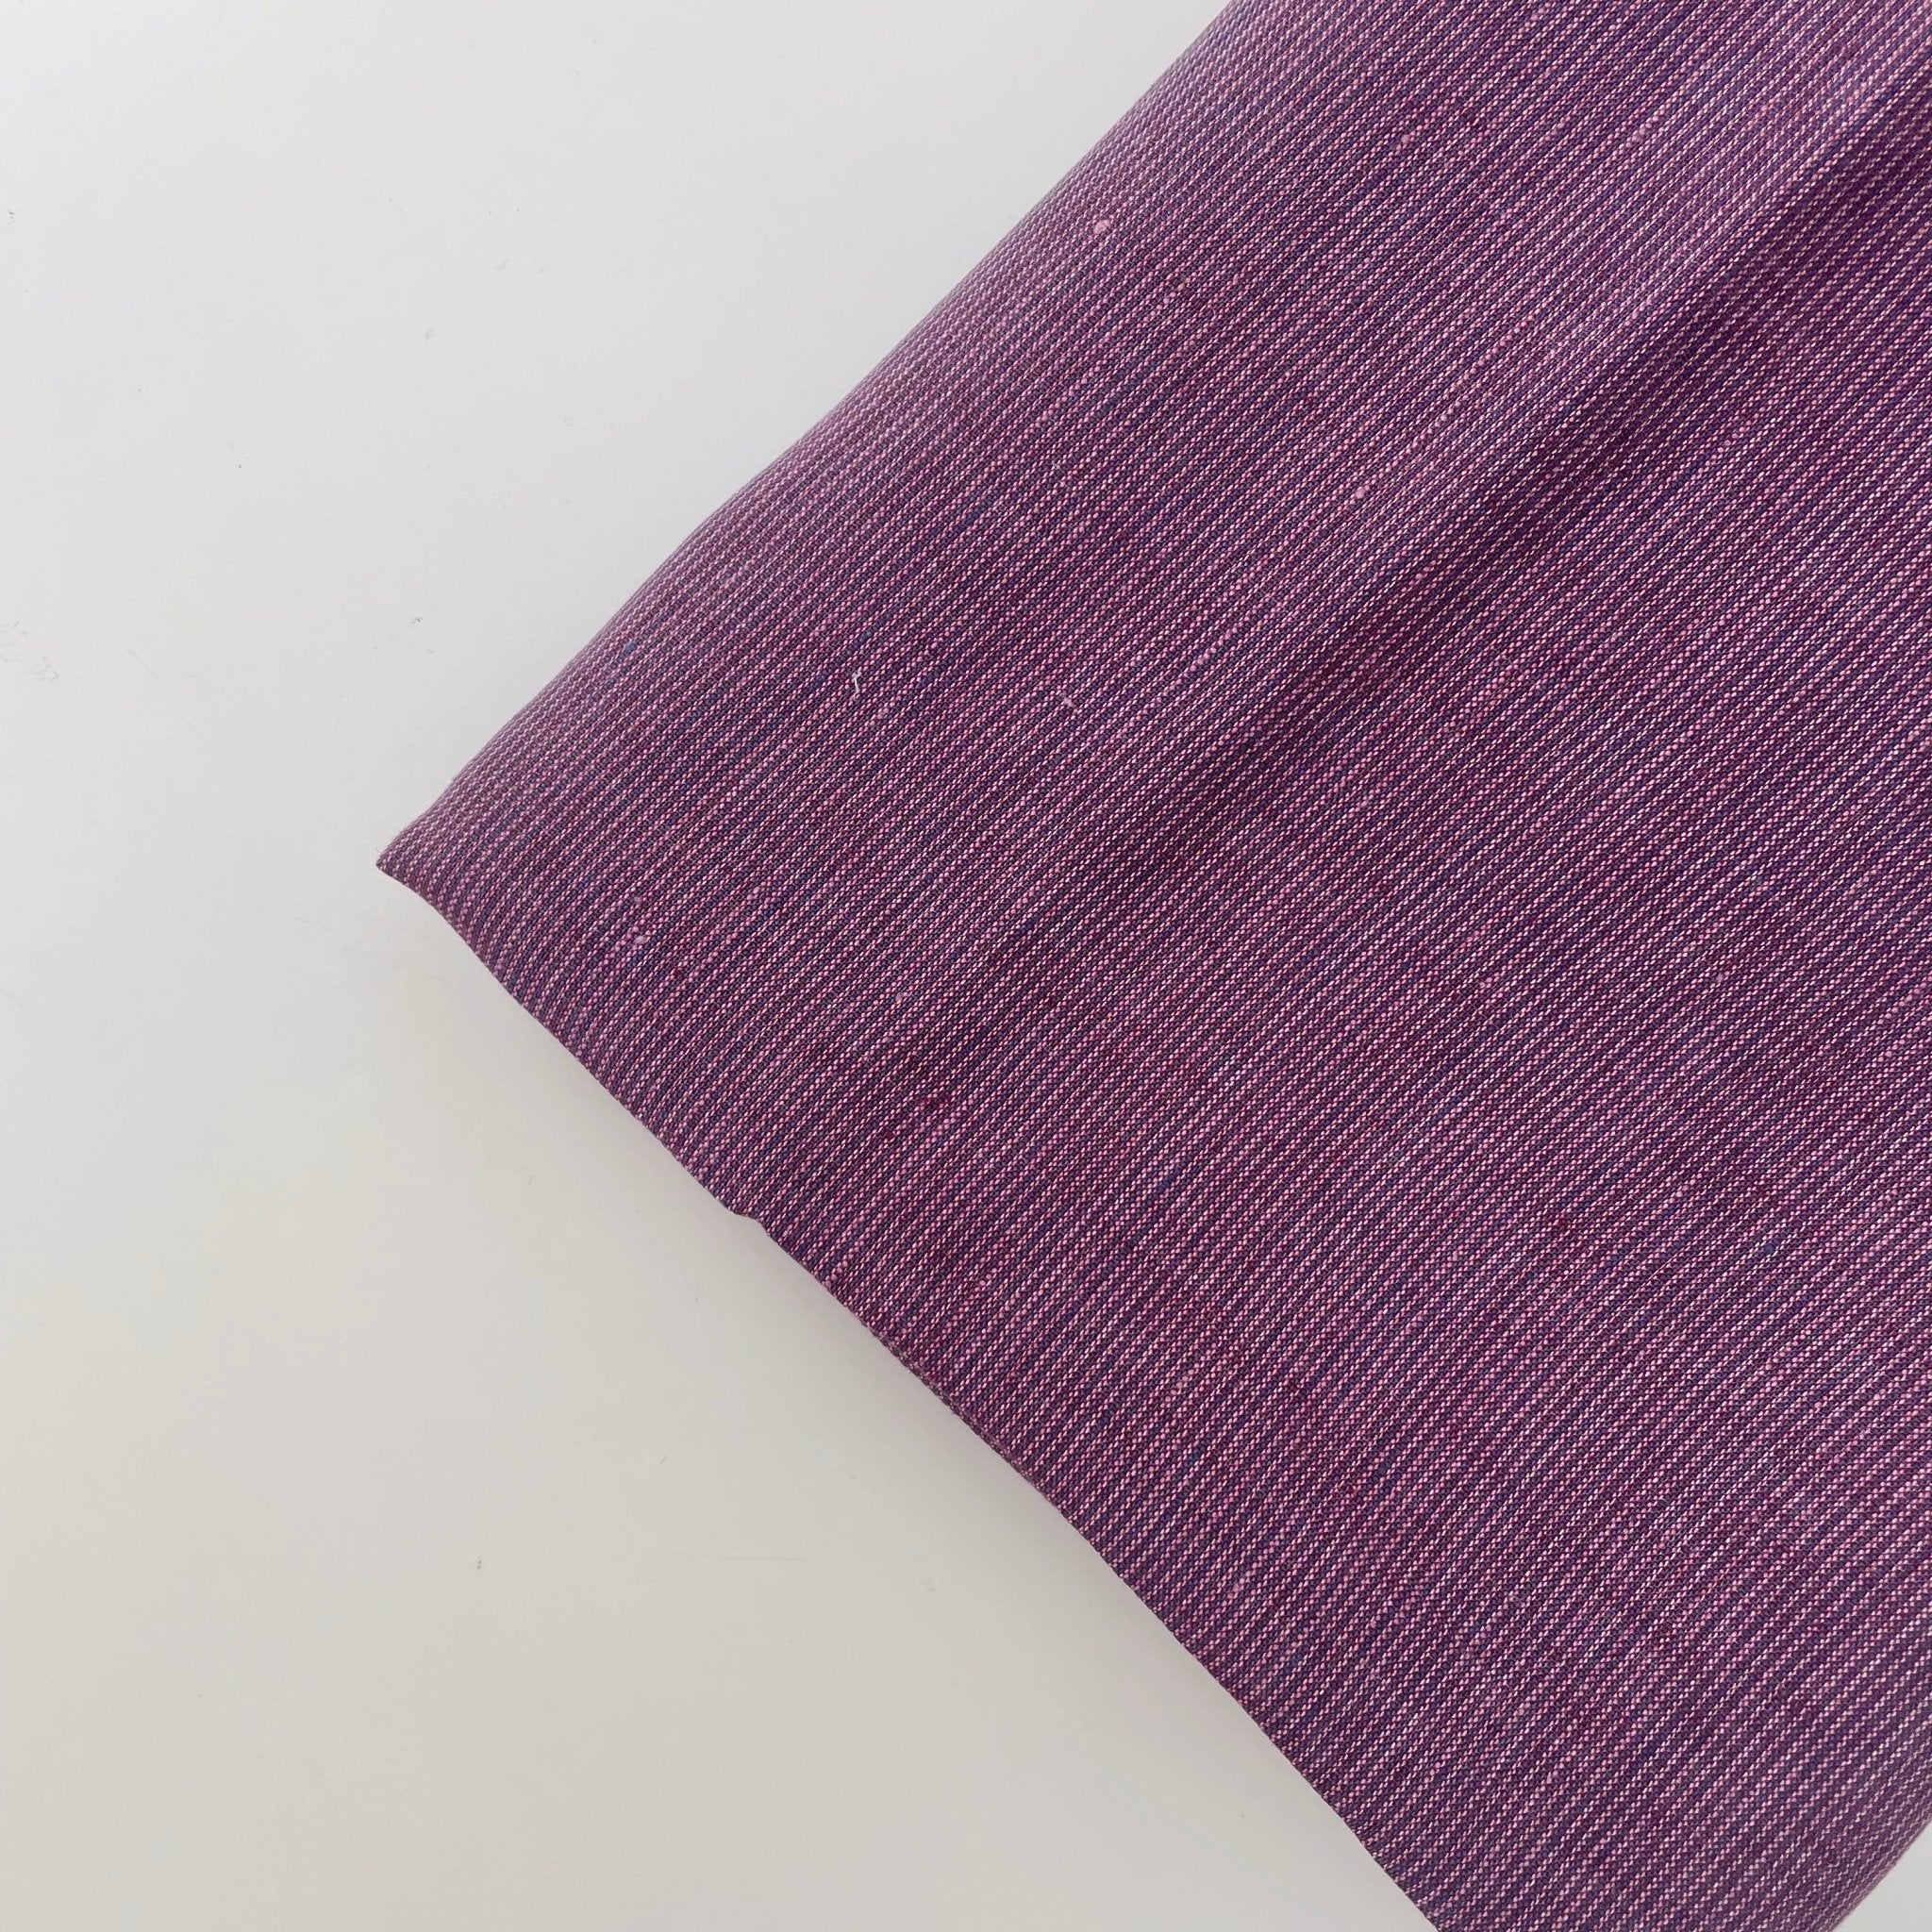 Linen Violet Stripe Fabric 6755 - The Linen Lab - Violet